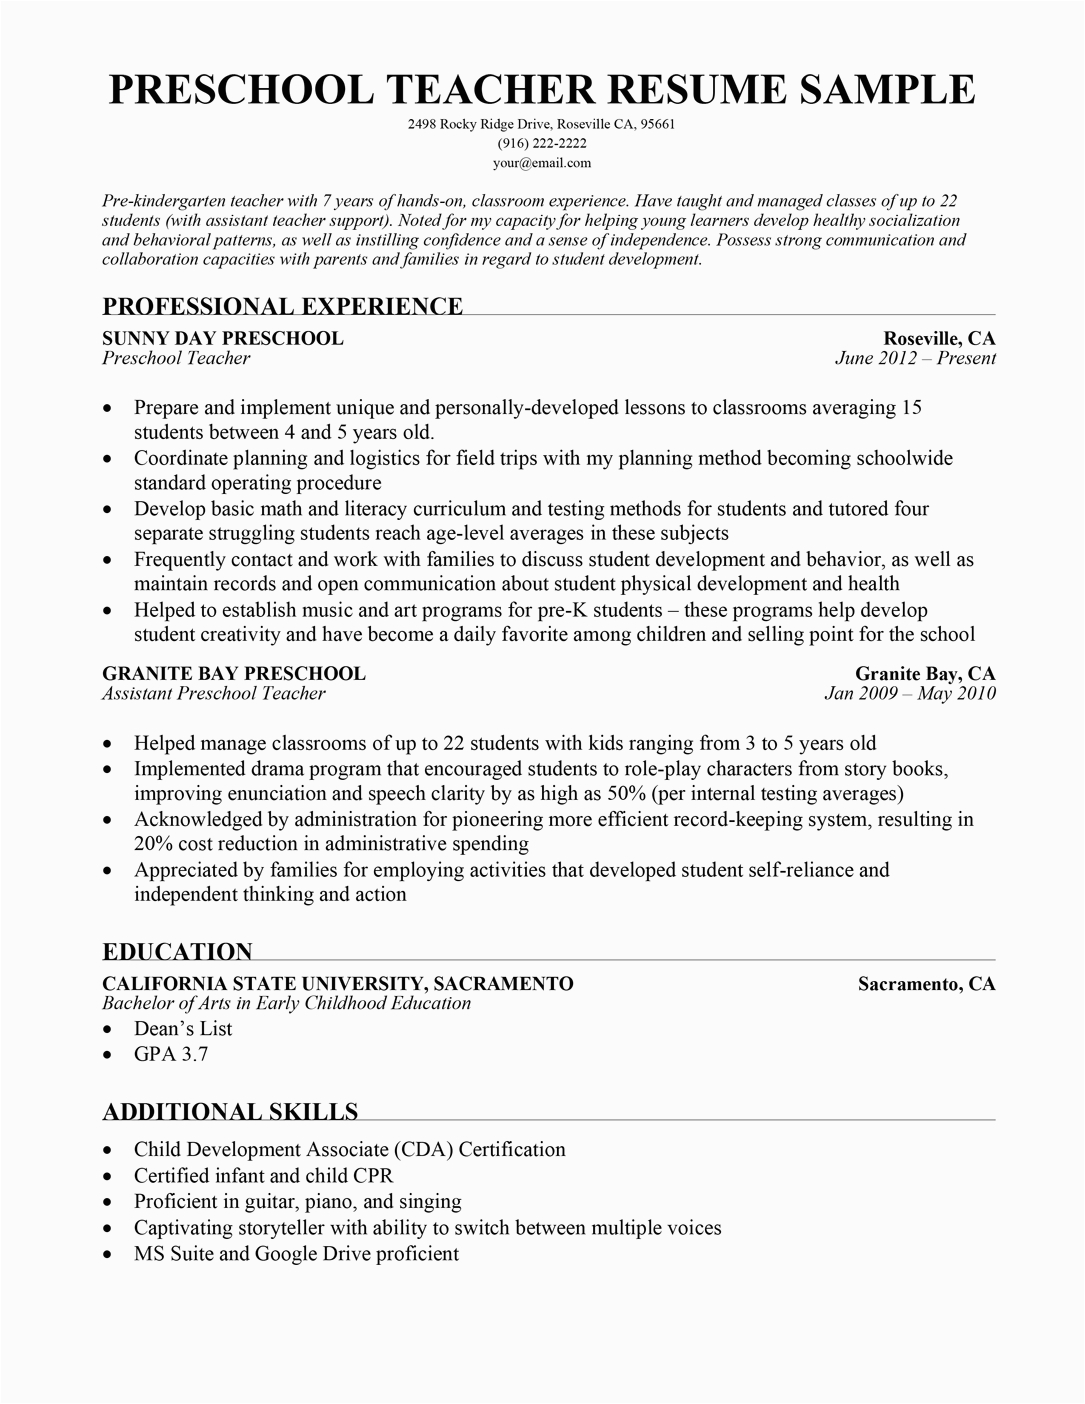 Sample Resume for Pre Primary School Teacher Preschool Teacher Resume Sample & Writing Tips